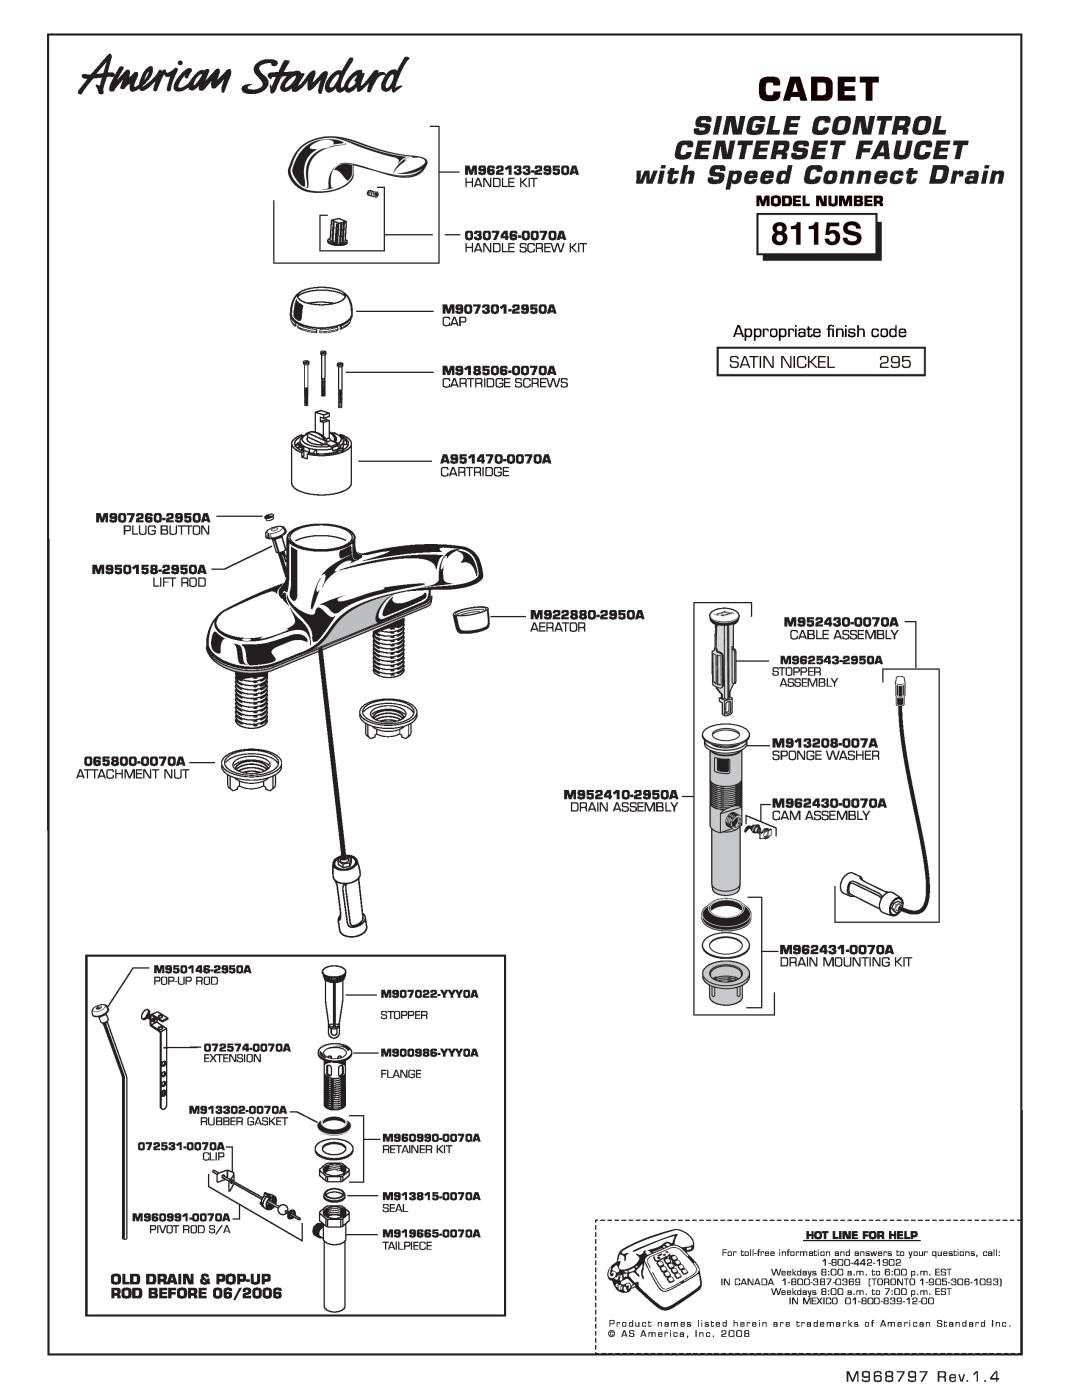 American Standard 8115S, Appropriate ﬁnish code, Satin Nickel, M962133-2950A, Cadet, Single Control, Centerset Faucet 